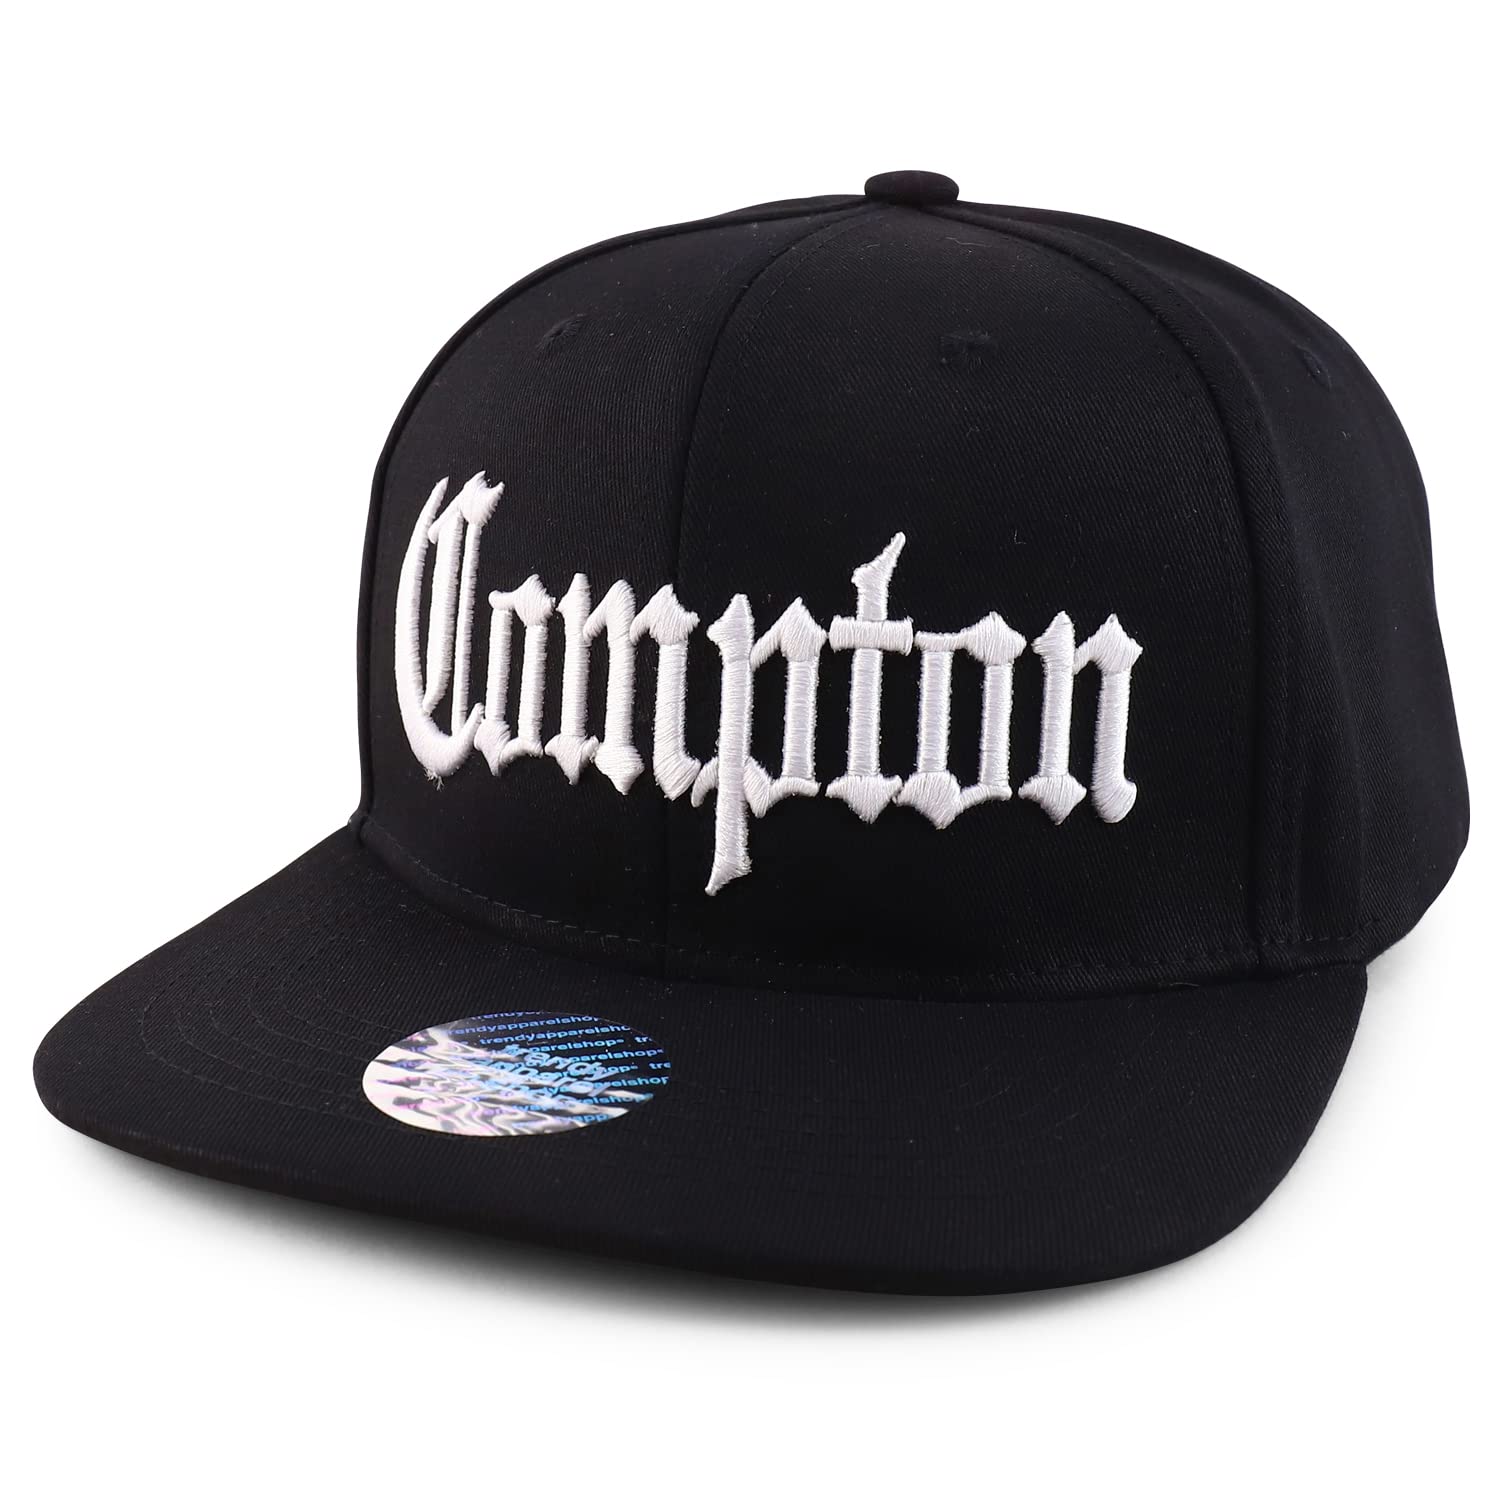 Trendy Apparel Shop Oversize XXL Old English Compton Embroidered Flatbill Snapback Baseball Cap